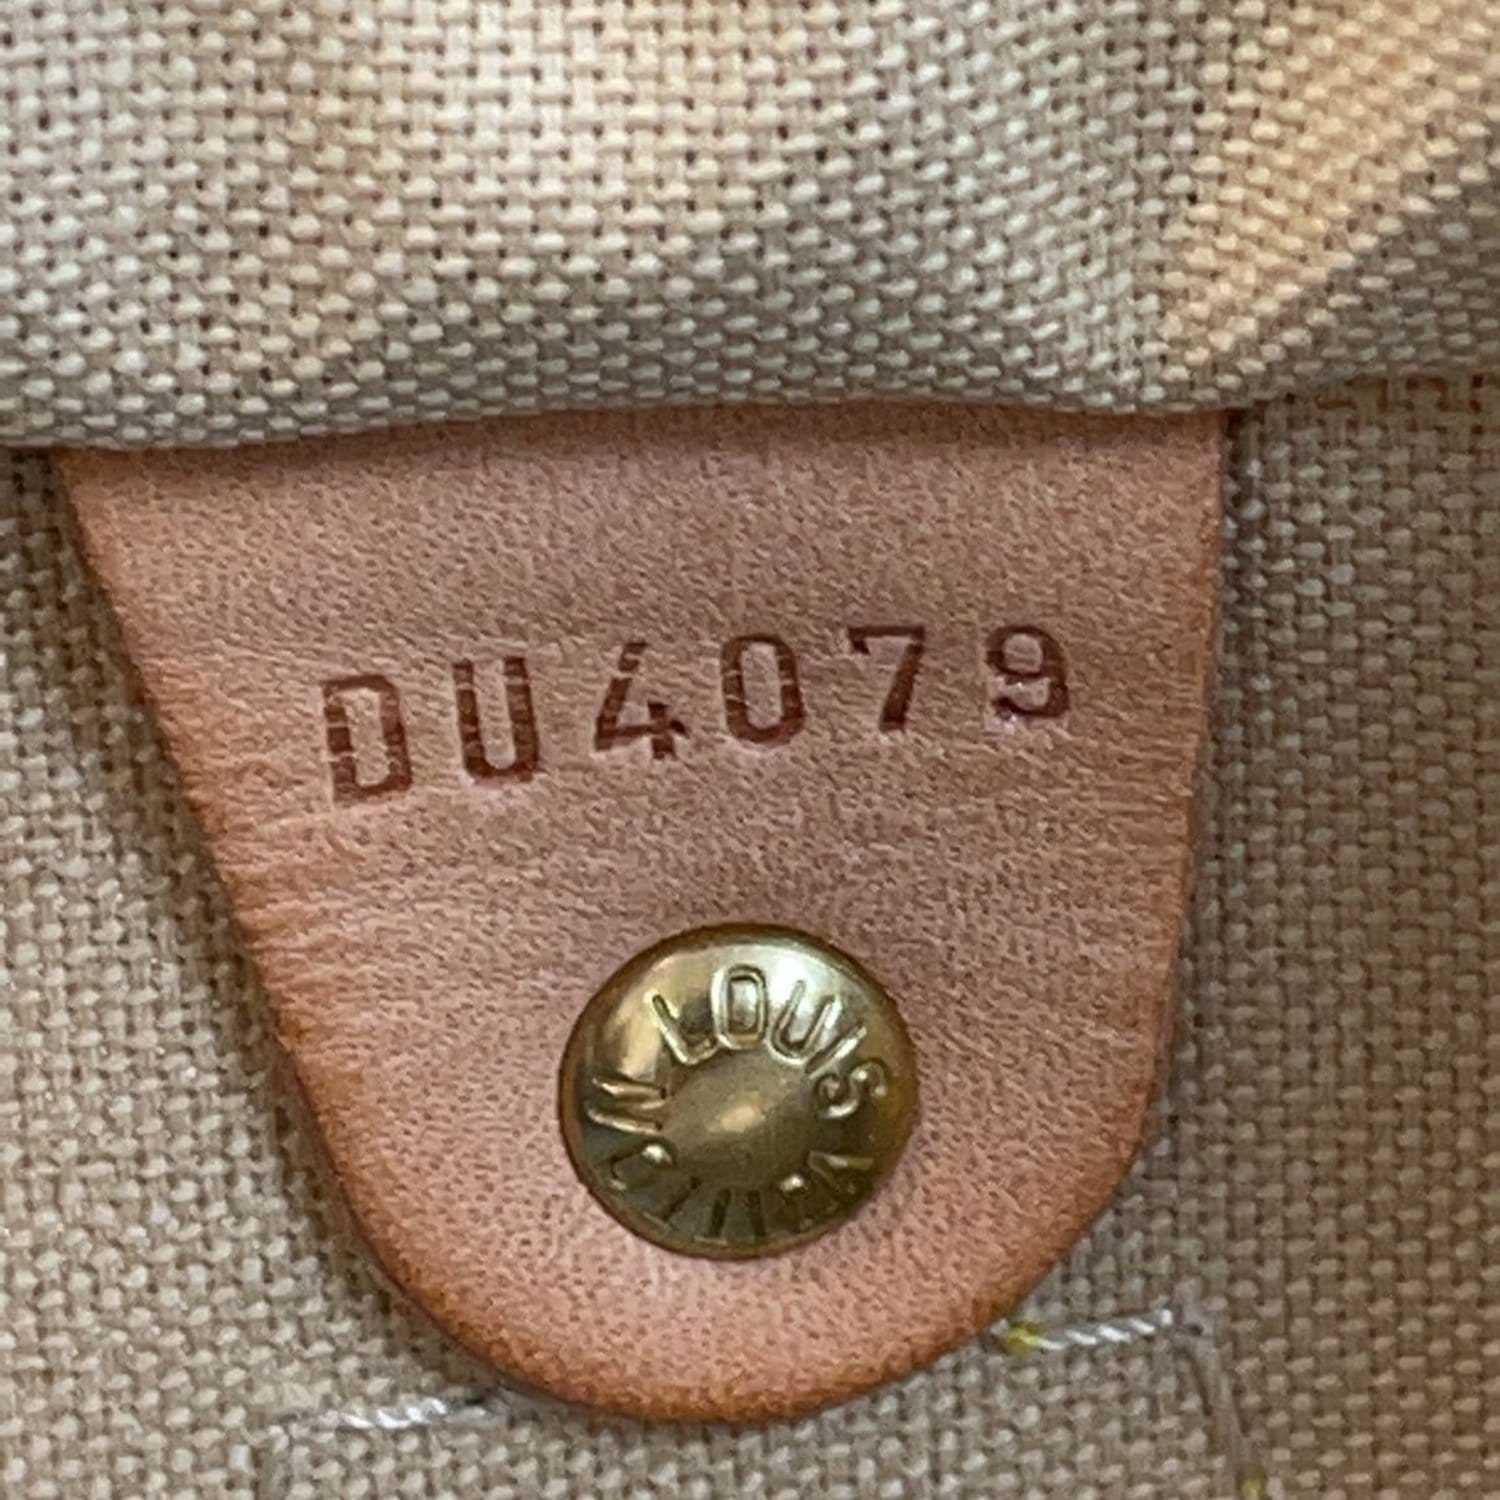 Louis Vuitton Speedy 35 Damier Azur Satchel Bag White